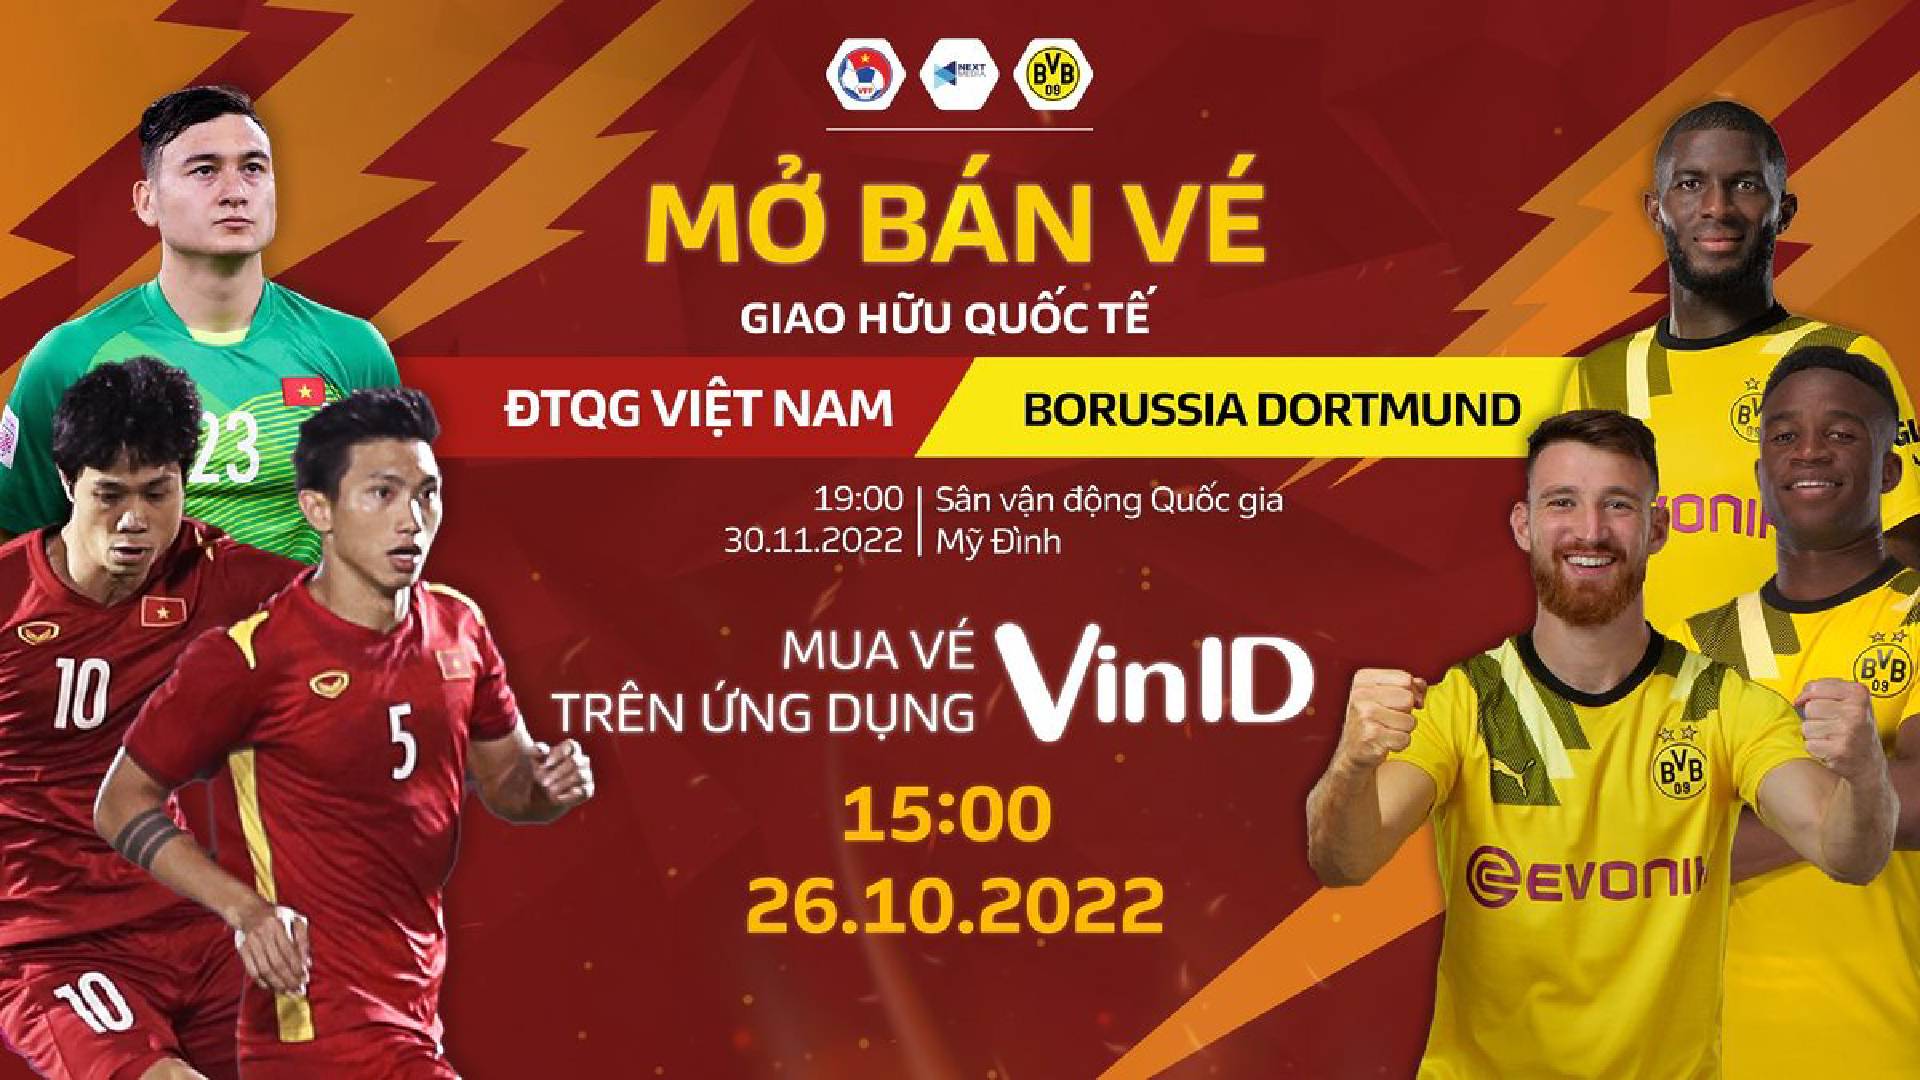 Vietnam Borussia Dortmund VFF Vietnam Bakal Bertemu Borussia Dortmund